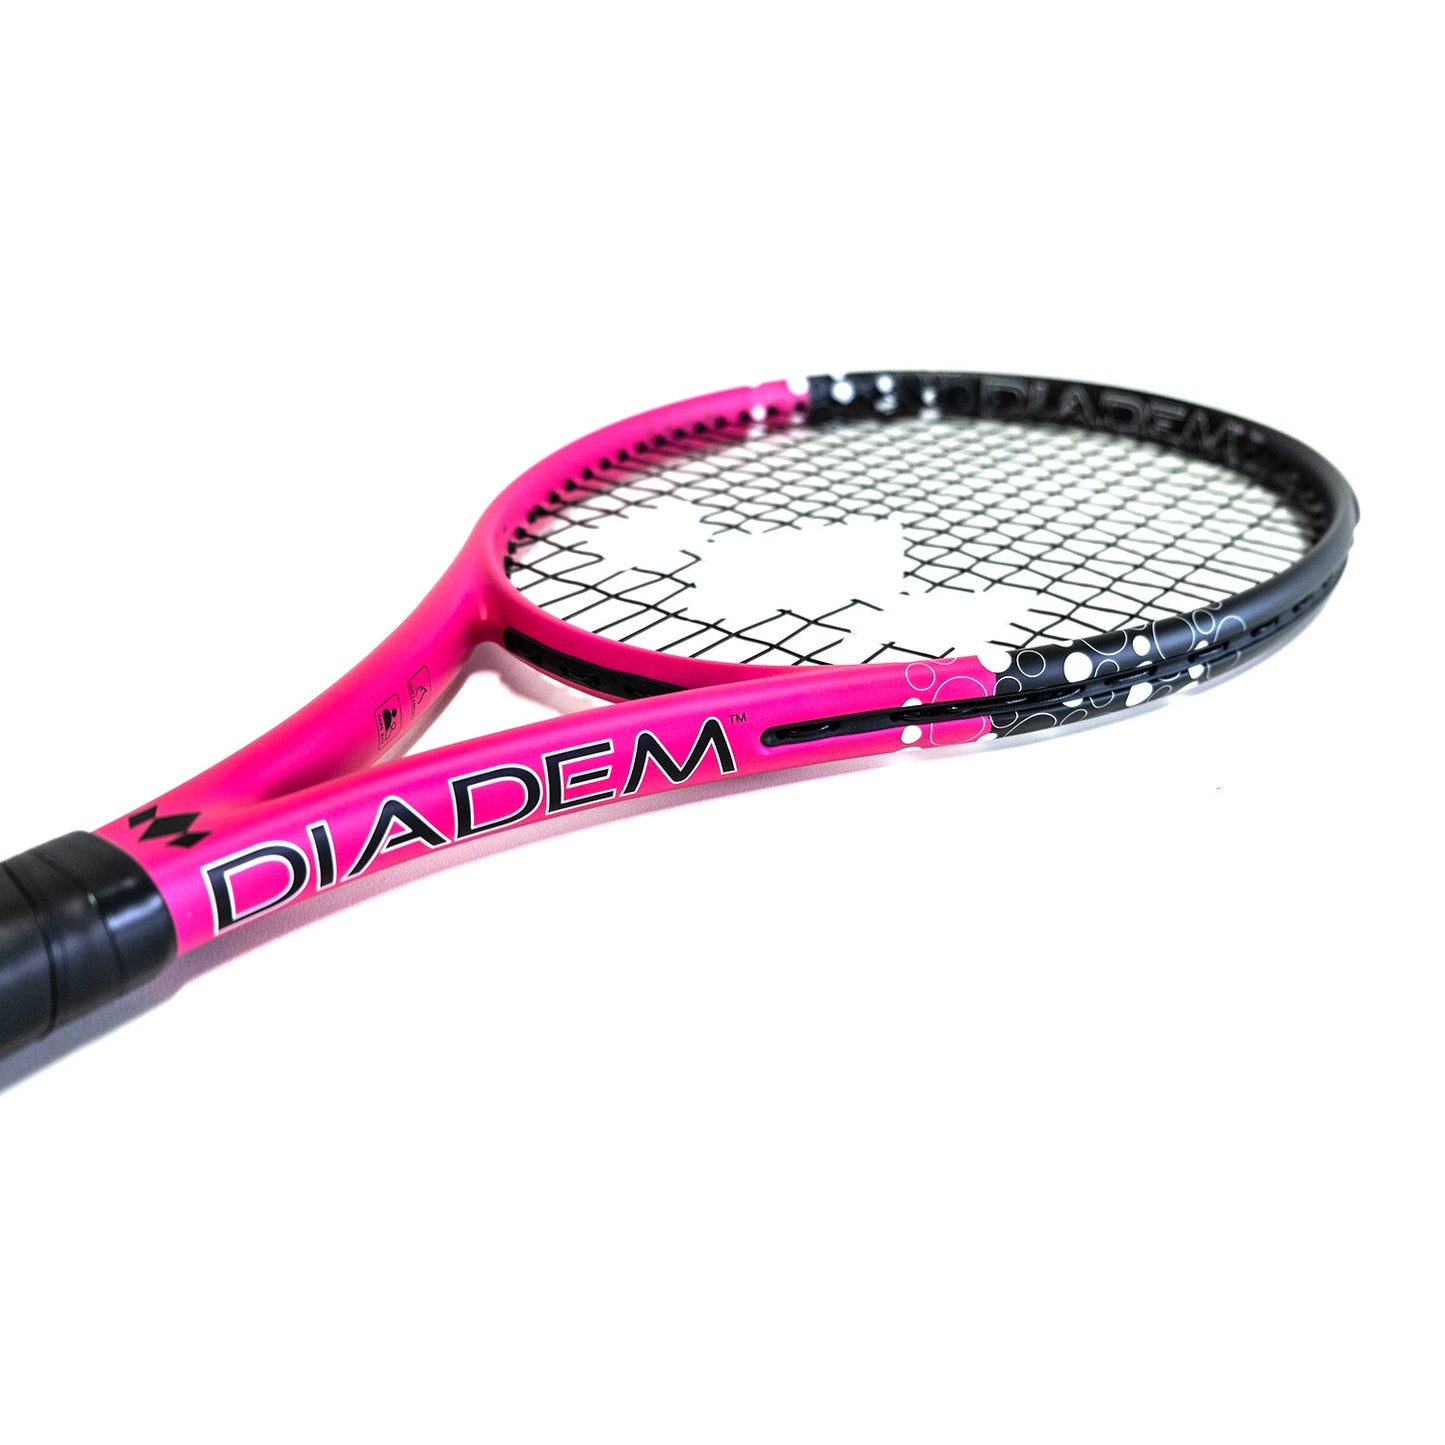 Diadem Super 25 Pink Junior Racket by Diadem Sports